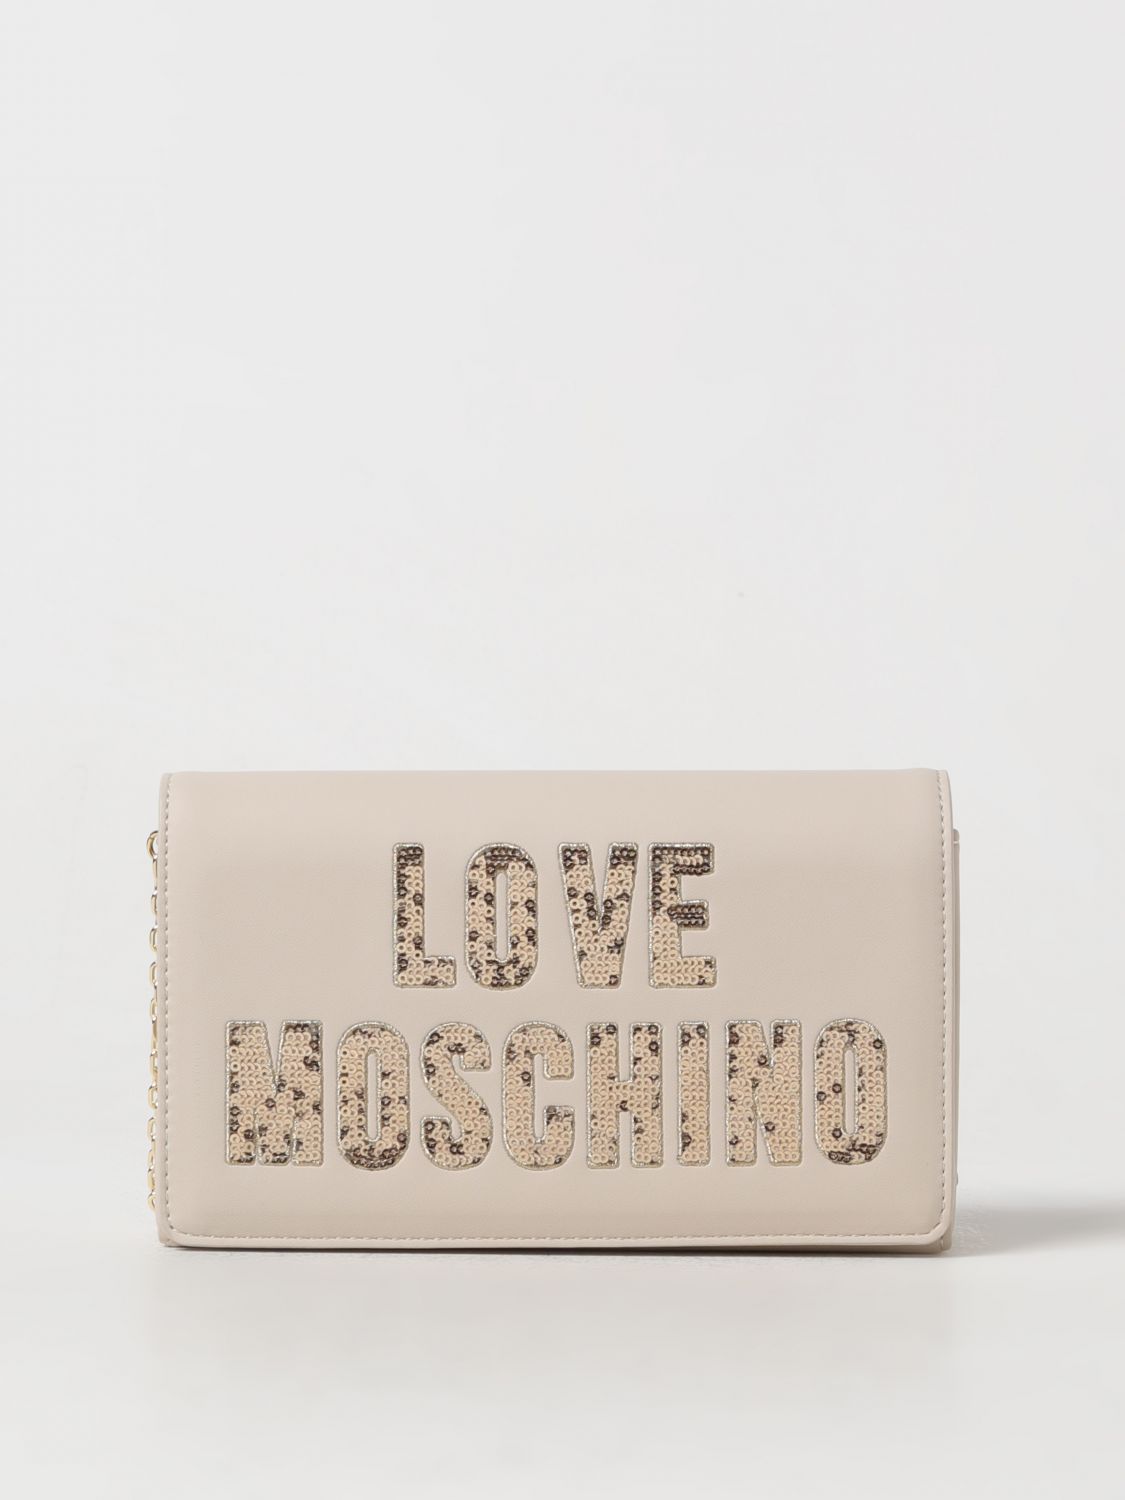 Love Moschino Crossbody Bags LOVE MOSCHINO Woman colour Ivory